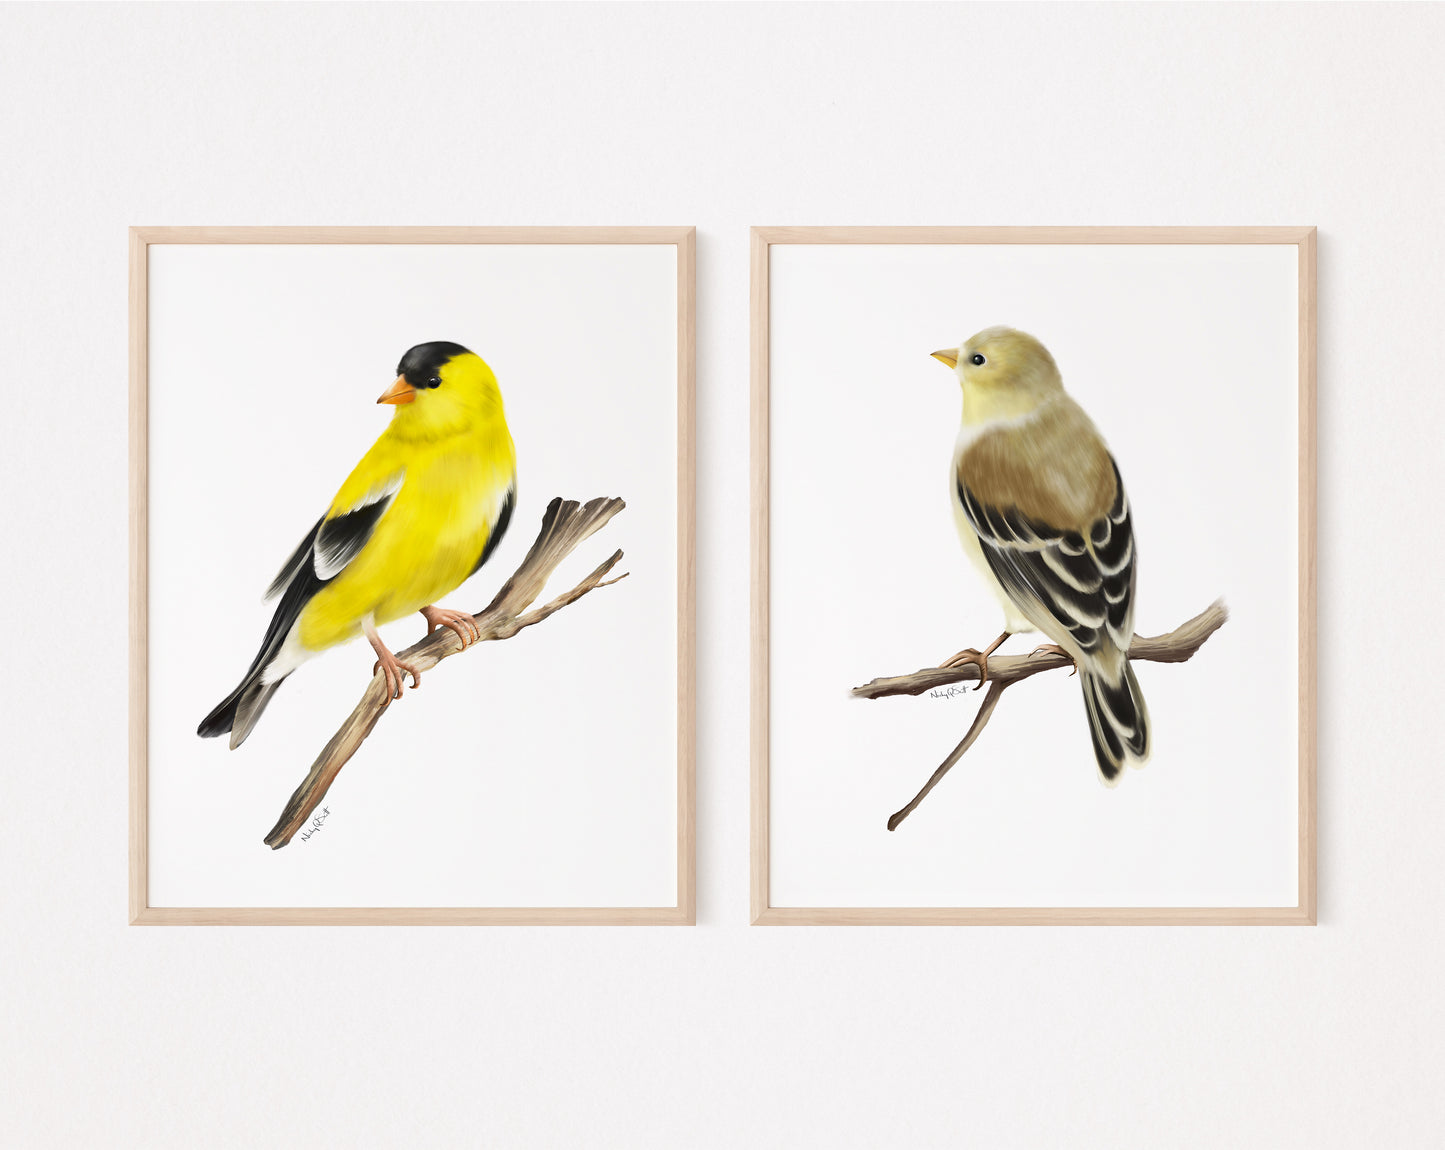 American Goldfinch Bird Art Prints - Set of 2- Studio Q - Art by Nicky Quartermaine Scott